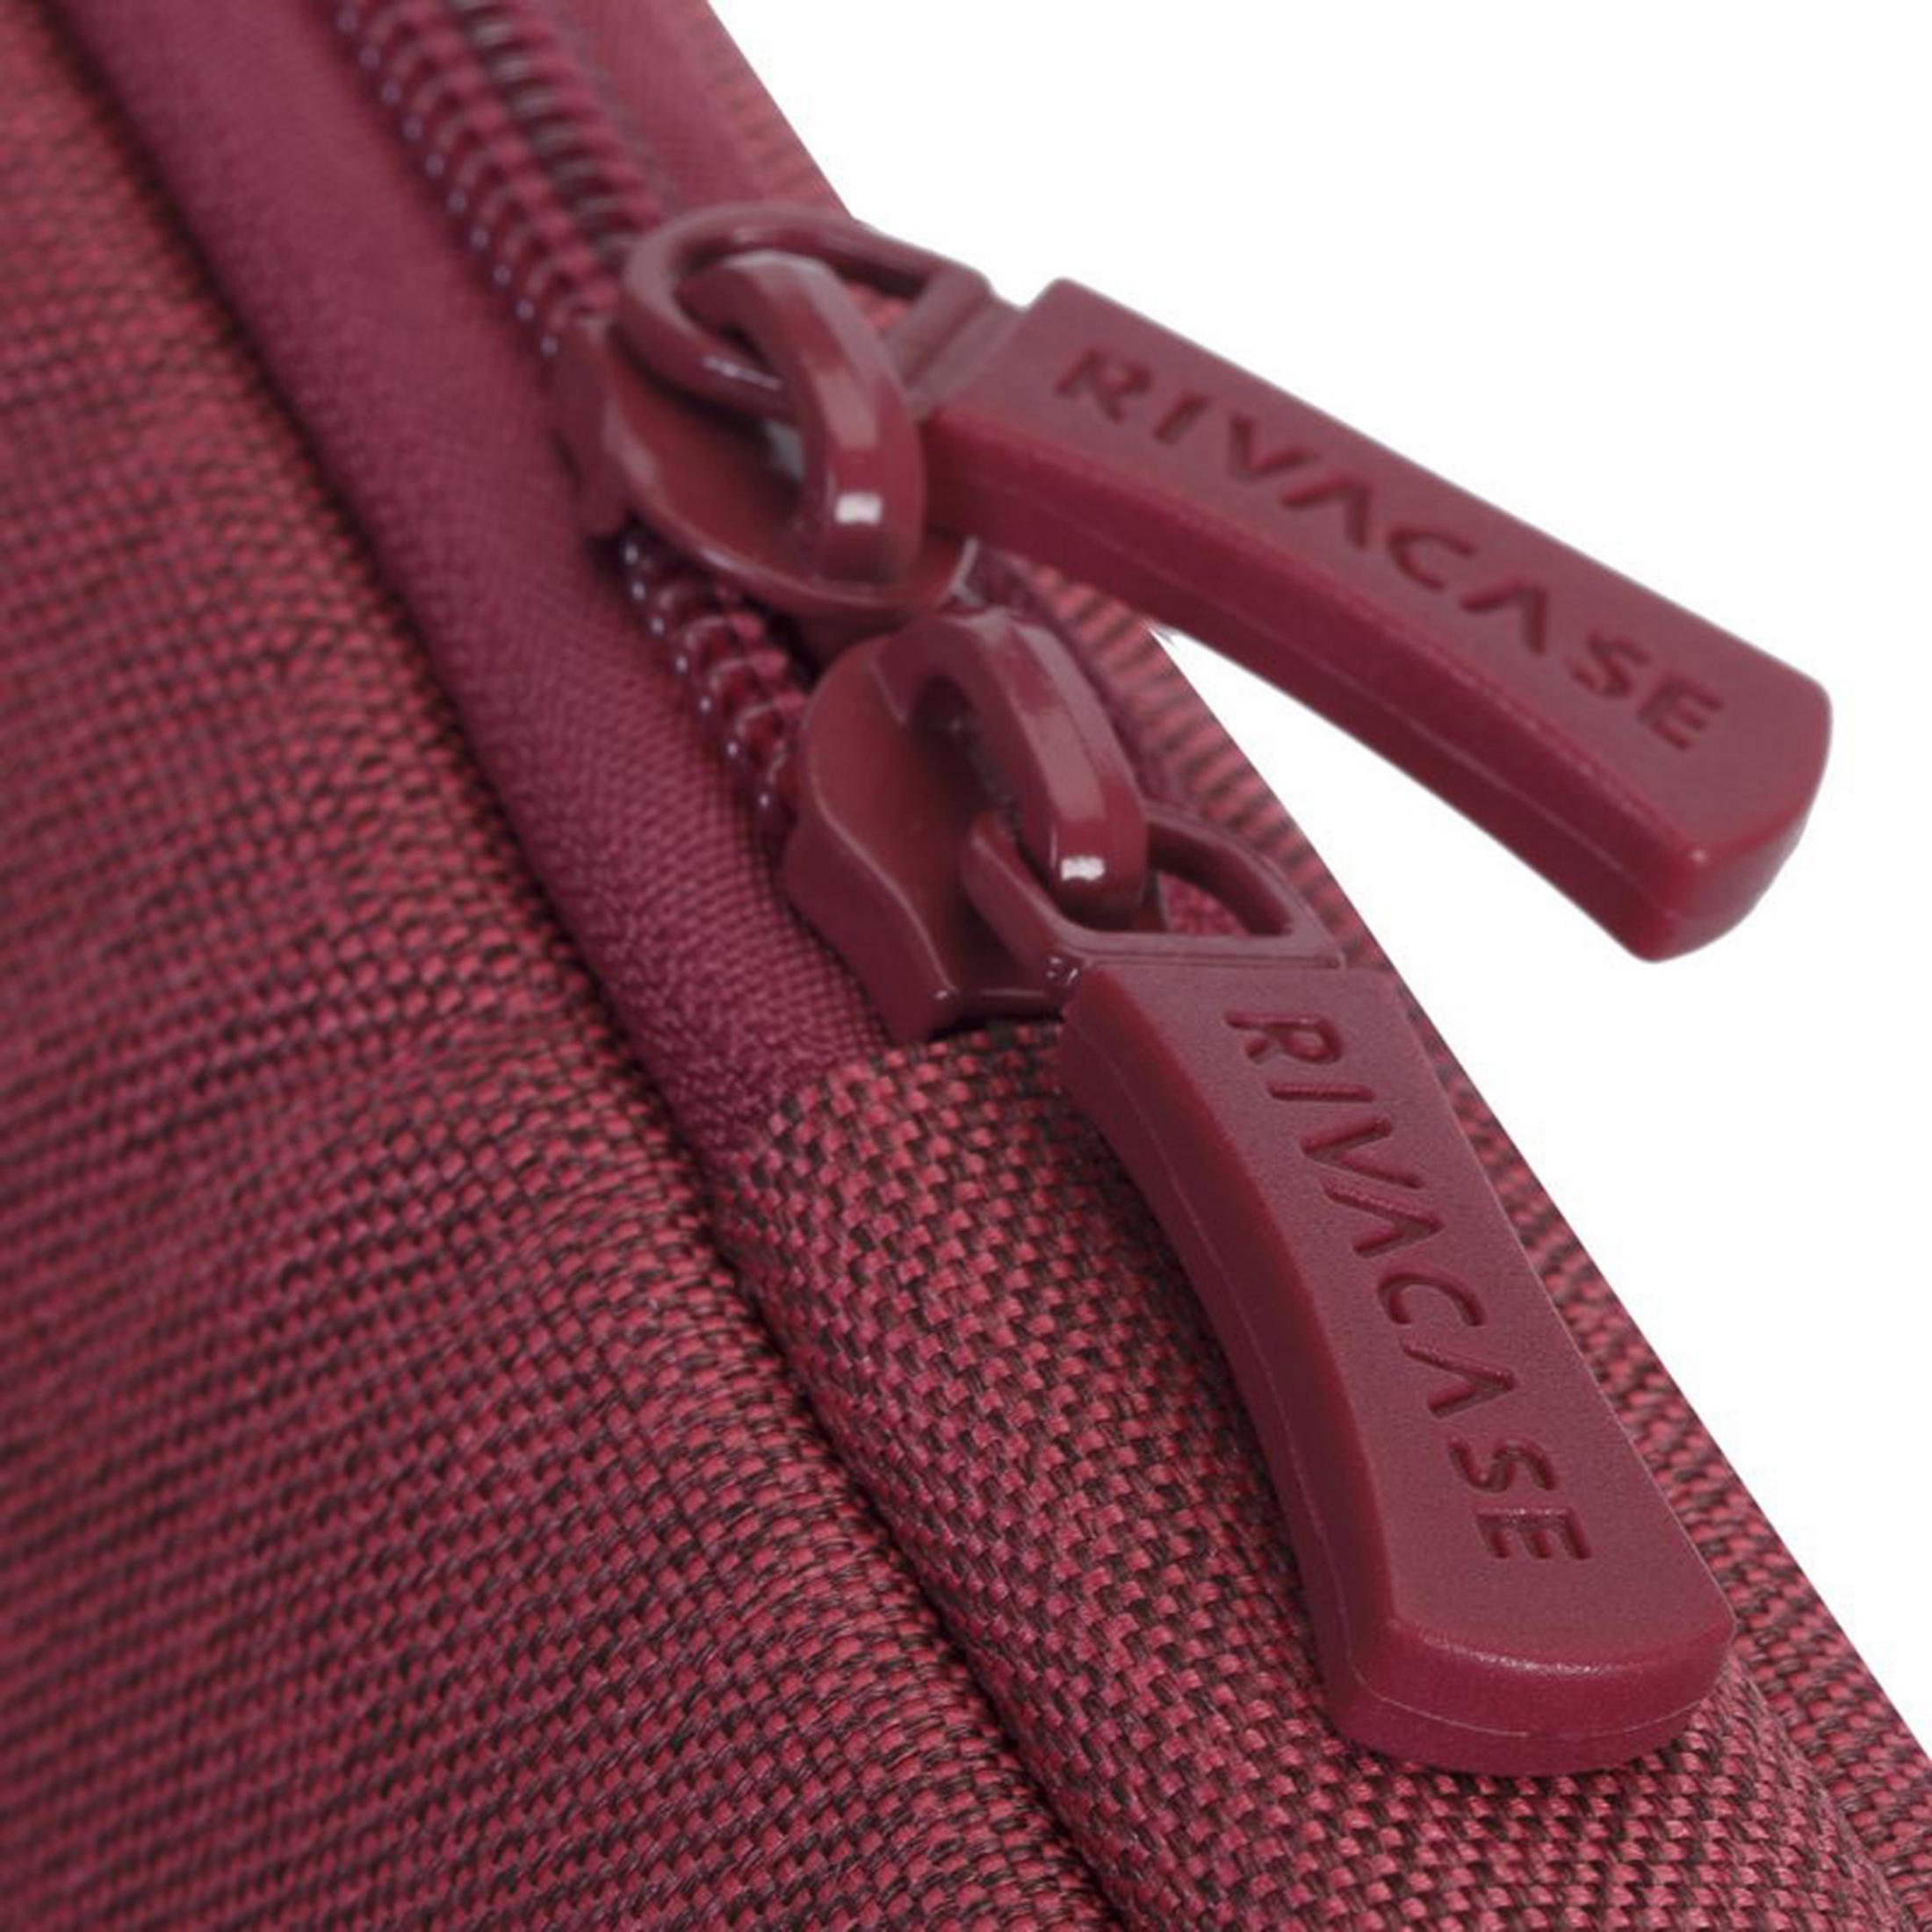 RED 7703 für Universal LAPTOP Sleeve Notebooktasche Polyester, 13.3 RIVACASE SLEEVE Rot